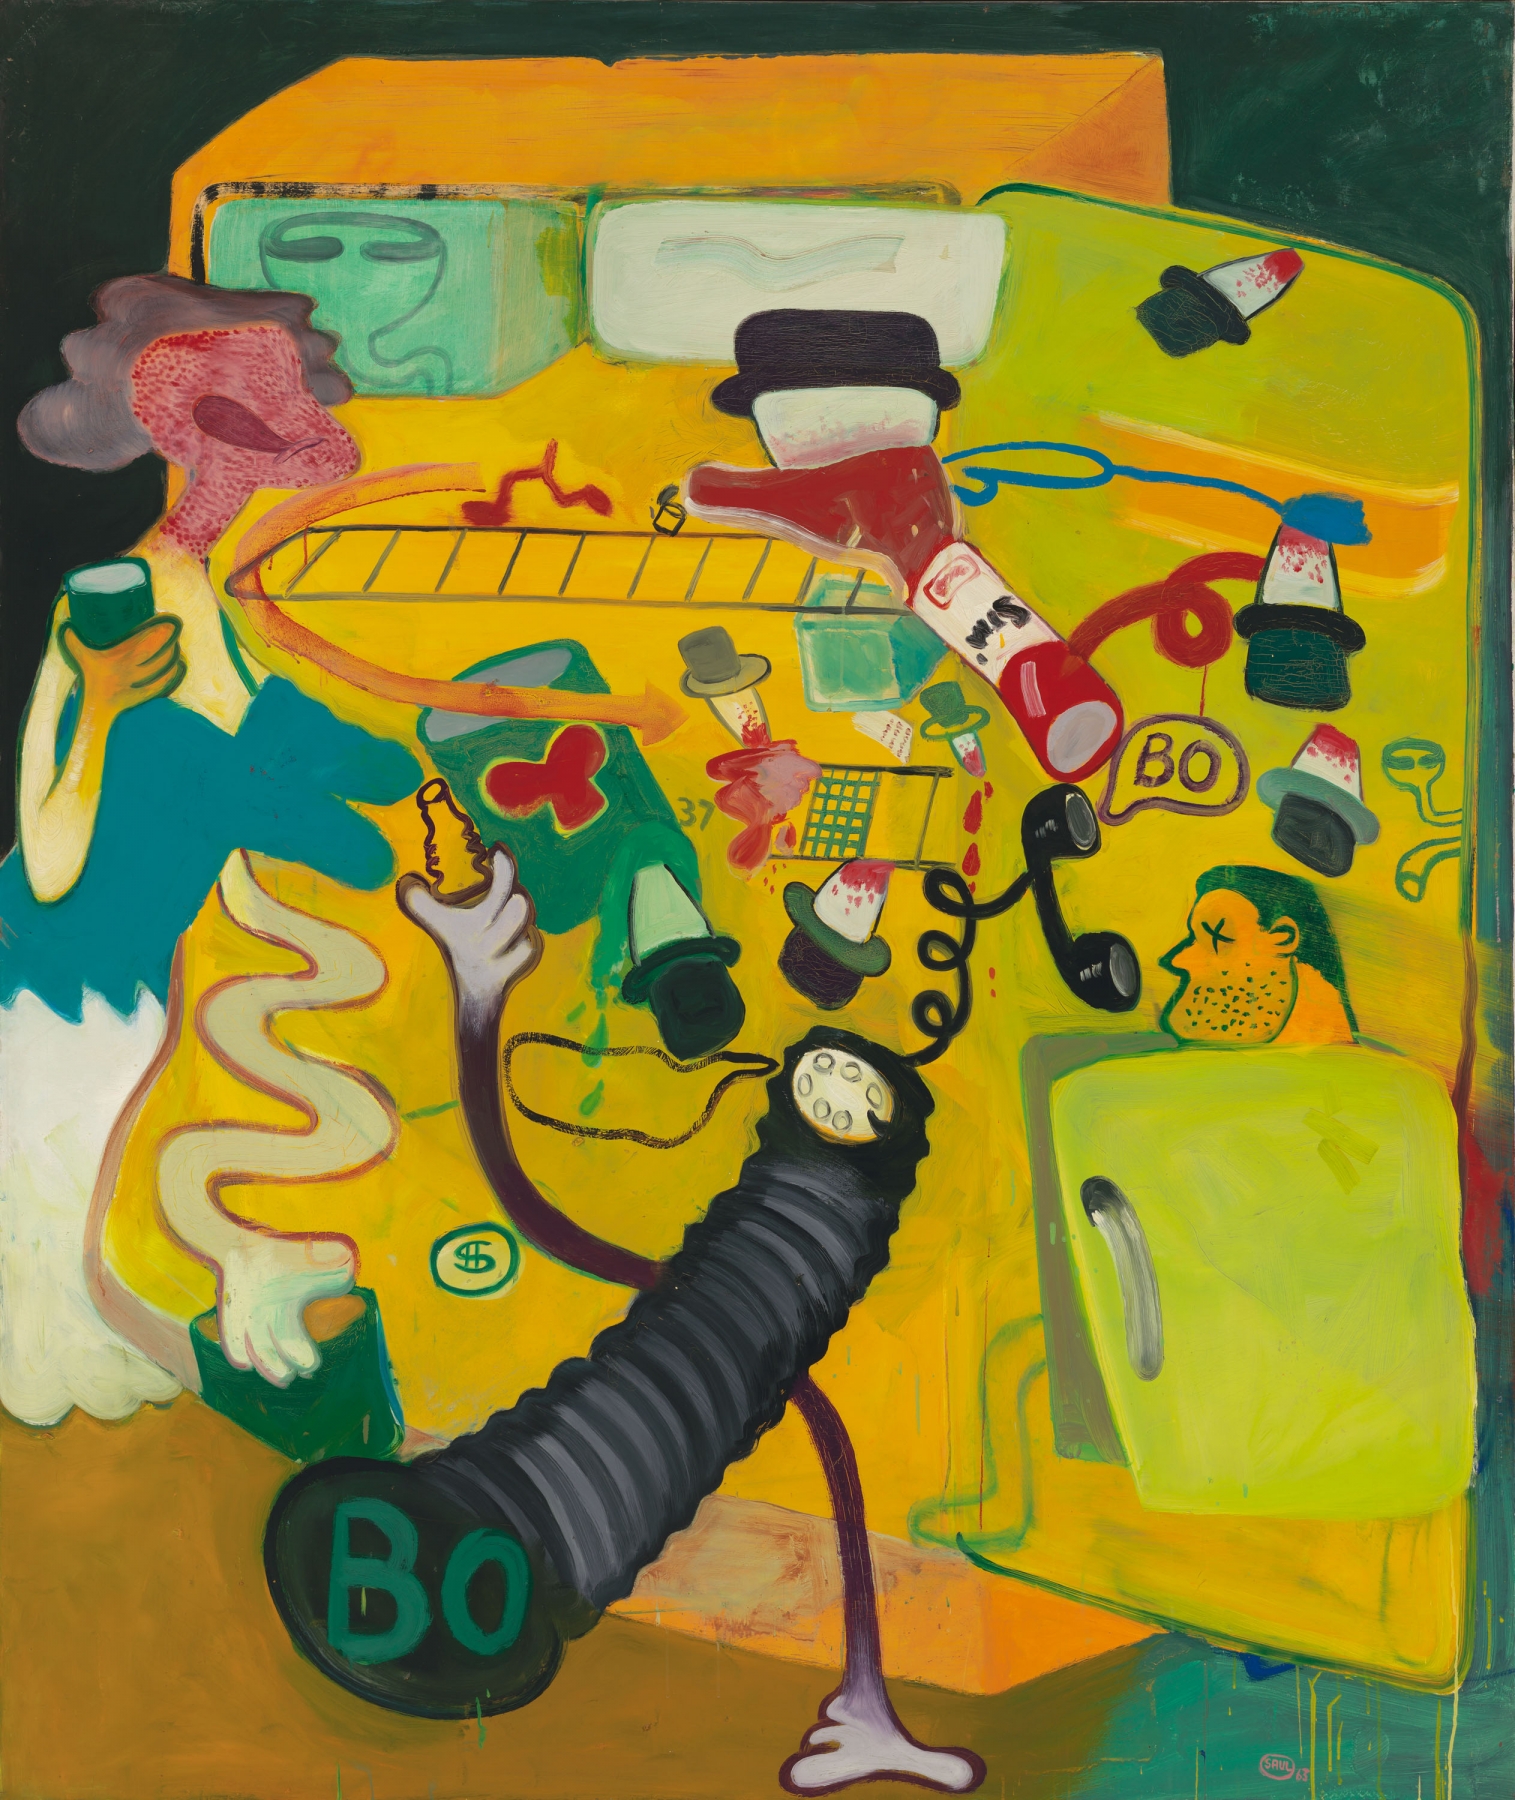 Peter Saul

&ldquo;Icebox #6&rdquo;, 1963

Oil on canvas

74 1/2 x 63 inches

189 x 160 cm

SAU 1963/014